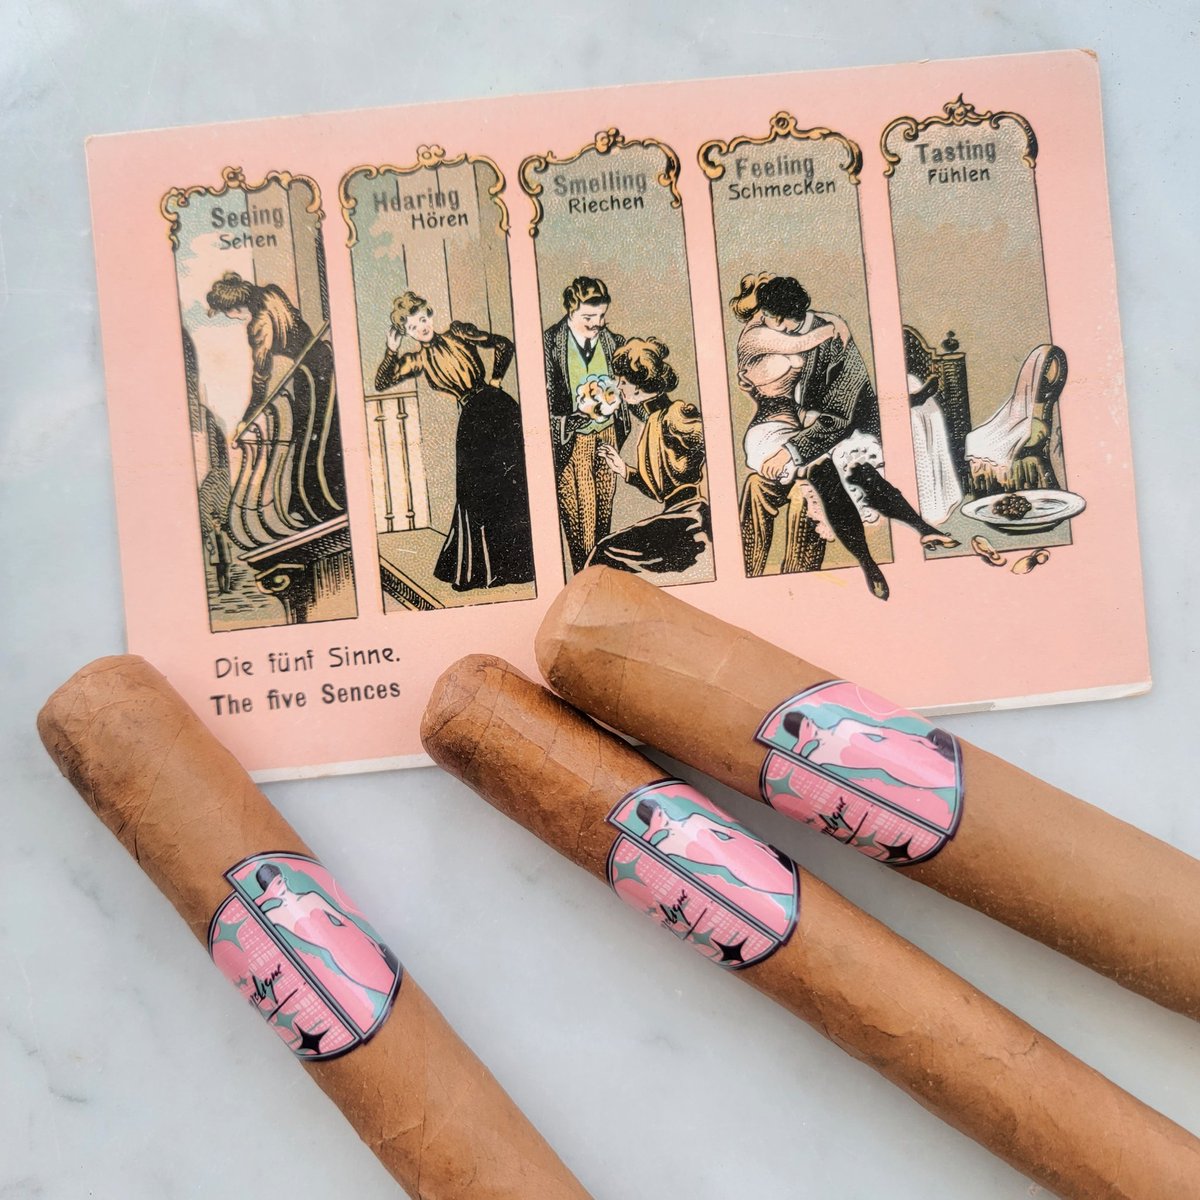 #FlirtyFriday
.
#Pinup #Risque #Angelique #Cigar #Cigars #PrincipleCigars #시가 #雪茄 #Zigarre #葉巻 #сигара #BOTL #SOTL #Cerutu #CigarLife #CigarPorn #Pink #CigarWorld #CigarOfTheDay #CigarStyle #CigarLover #VintagePostcard